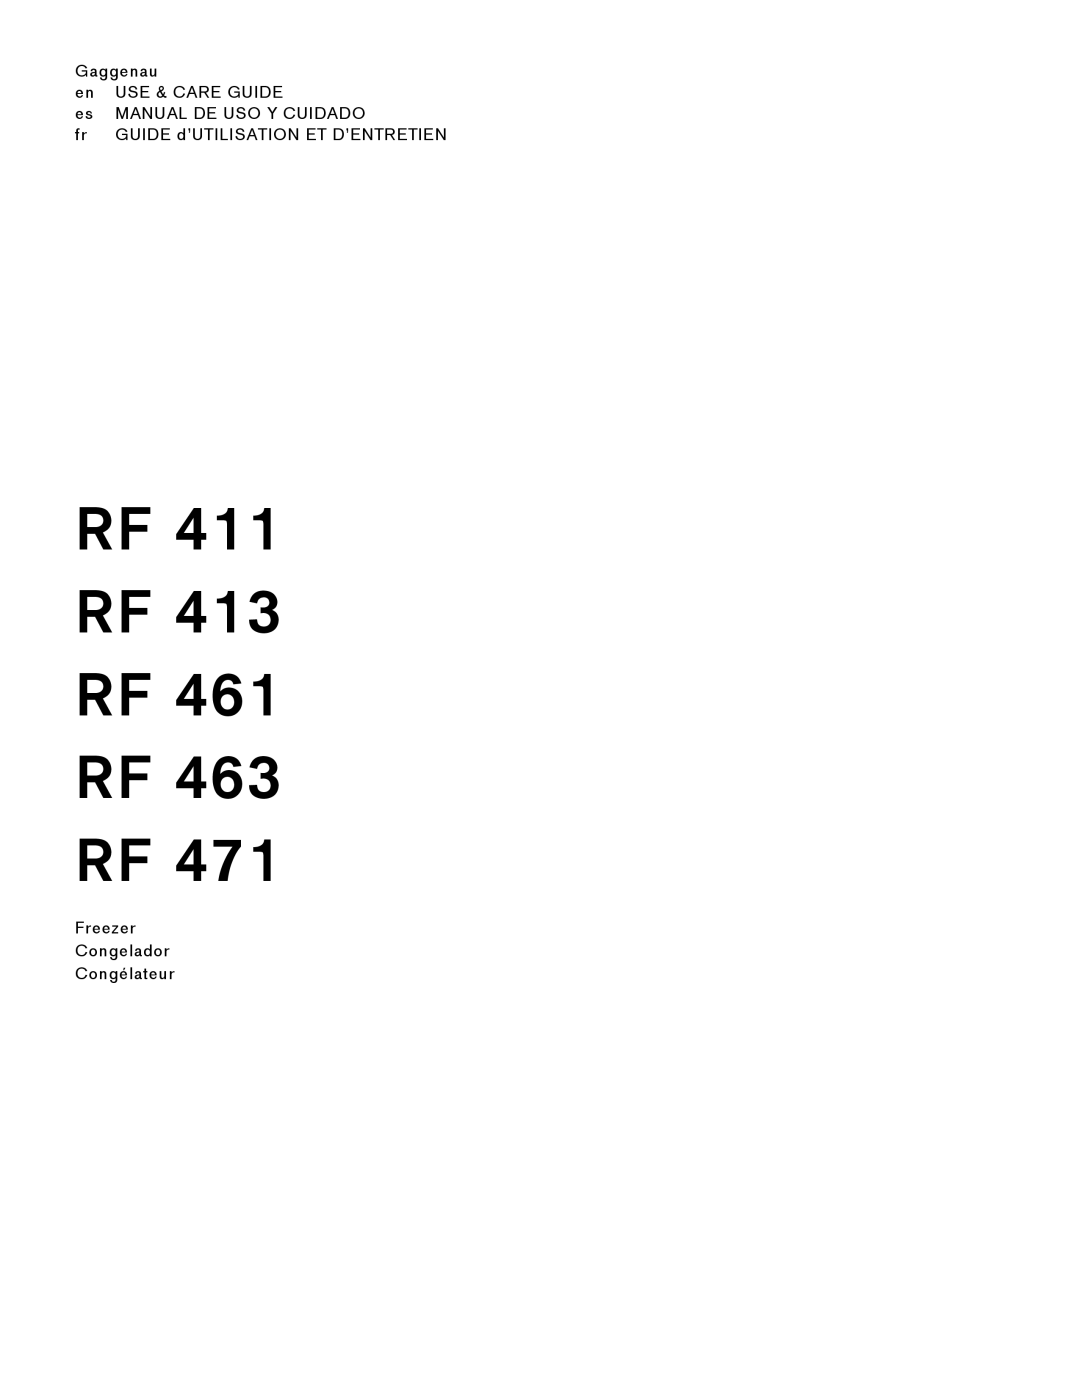 Gaggenau RF 463 manual Rf Rf Rf Rf Rf, Gaggenau, Use & Care Guide, Manual De Uso Y Cuidado, Freezer Congelador Congélateur 